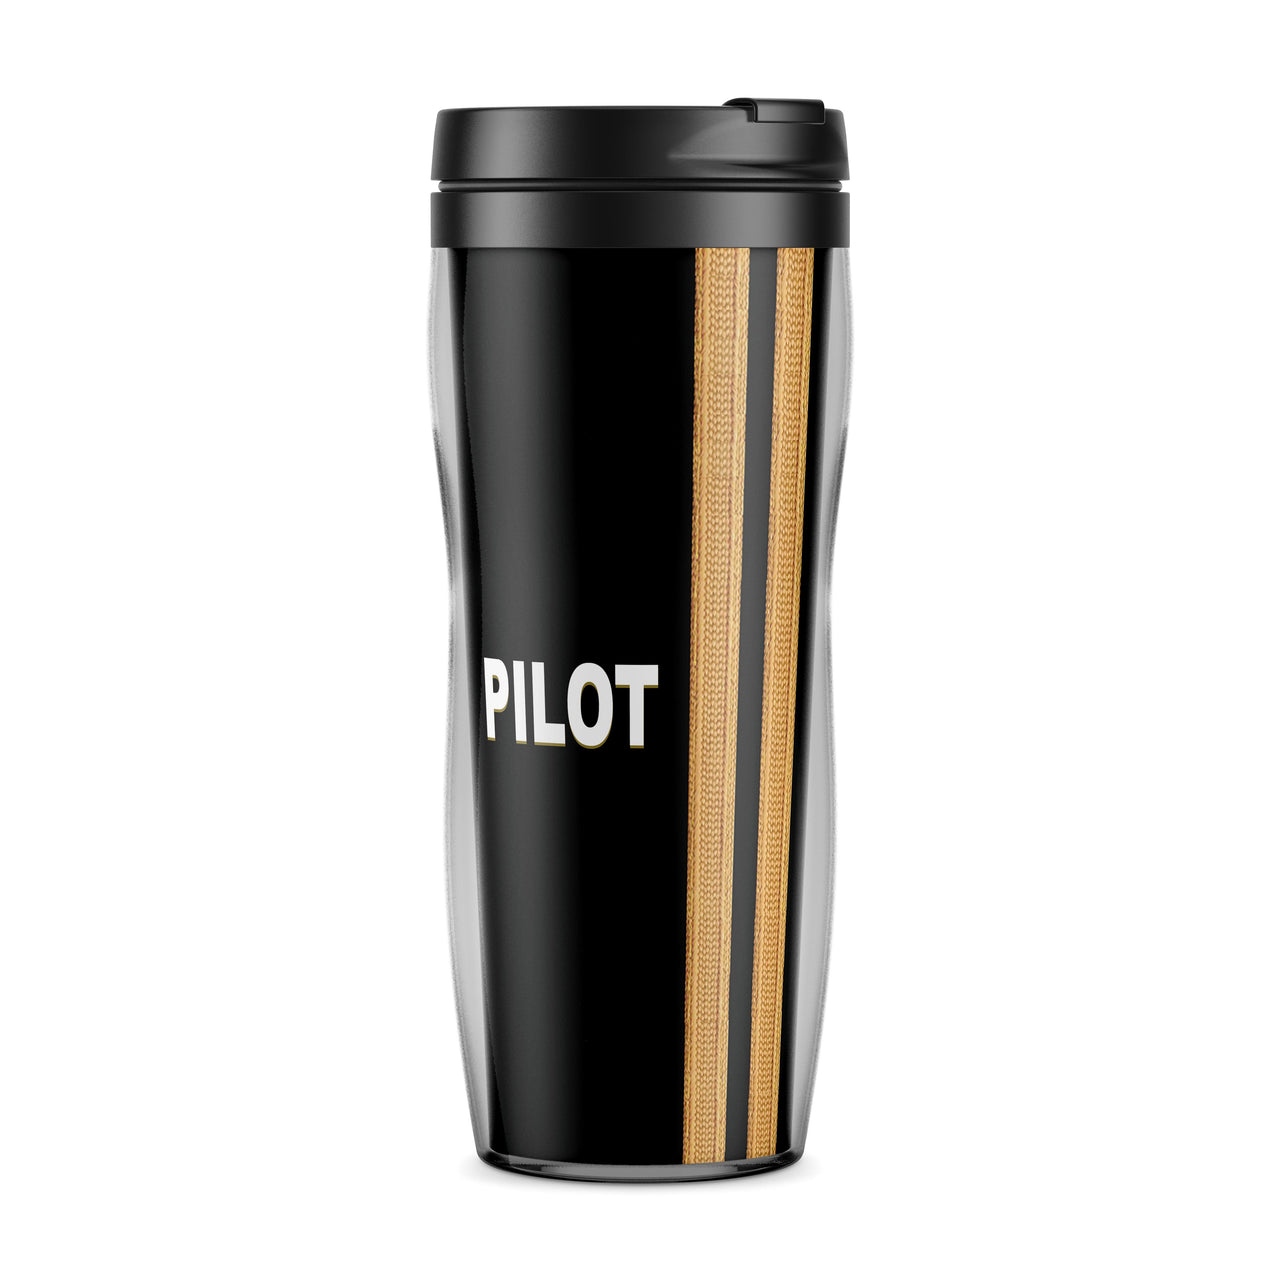 PILOT & Special Golden Epaulettes (4,3,2 Lines) Designed Travel Mugs